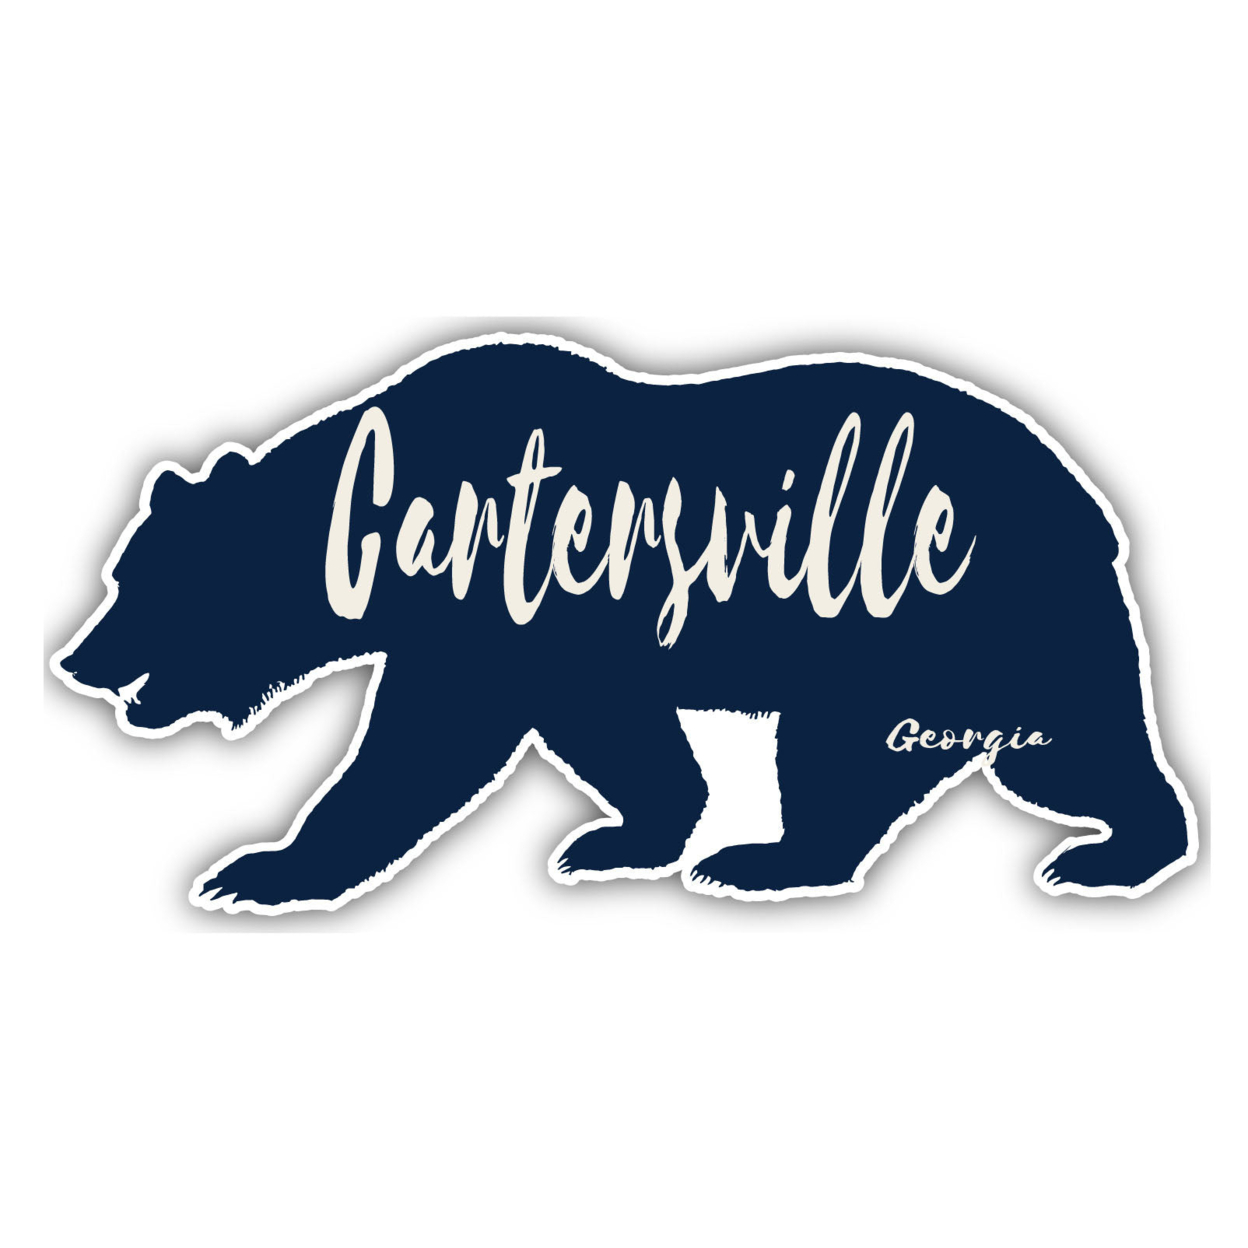 Cartersville Georgia Souvenir Decorative Stickers (Choose Theme And Size) - 4-Pack, 2-Inch, Bear